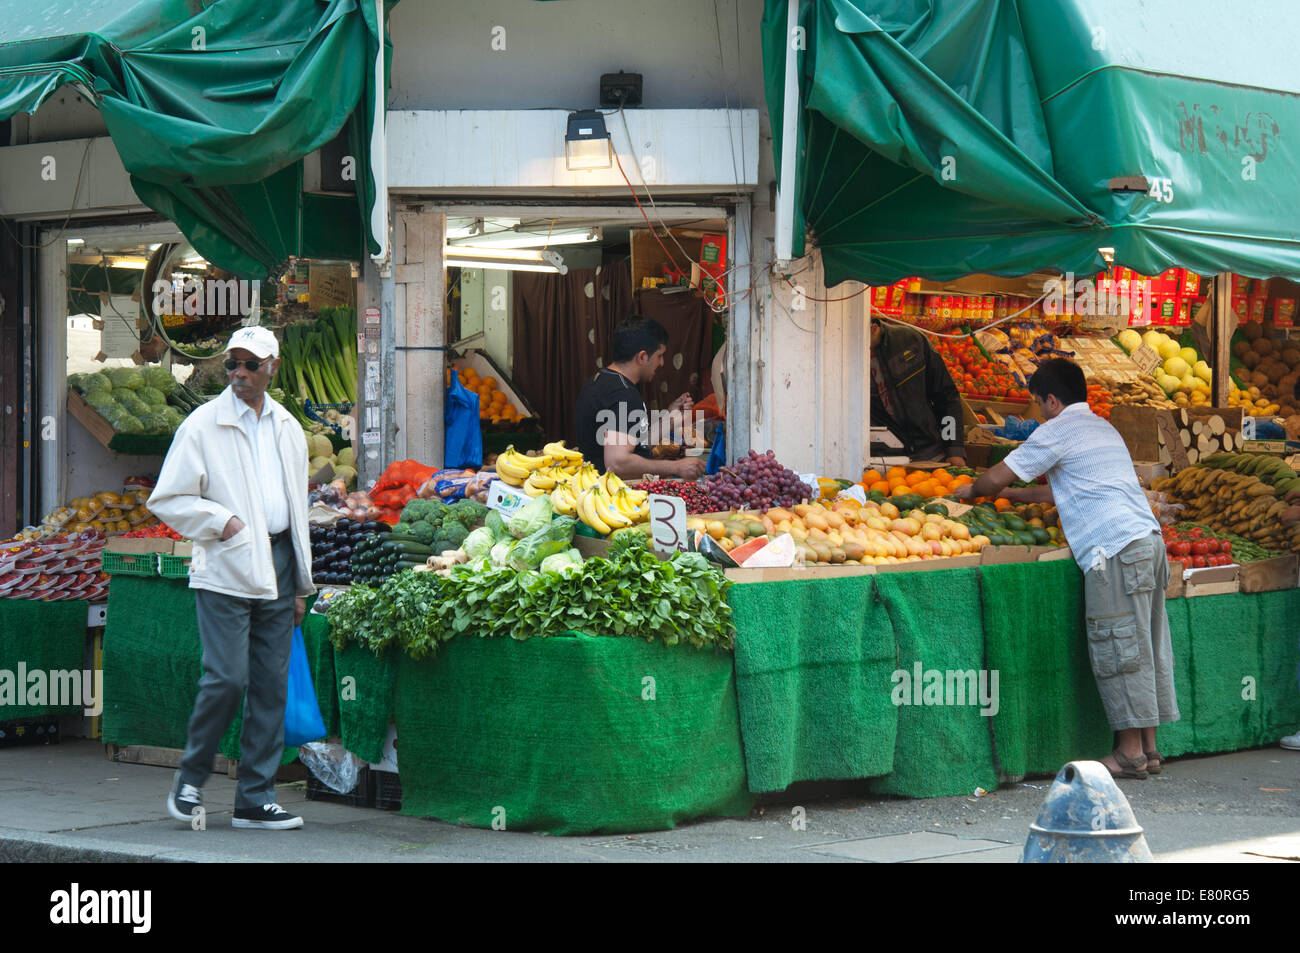 Fruit & Vegetable stall, Brixton, London. England. Stock Photo